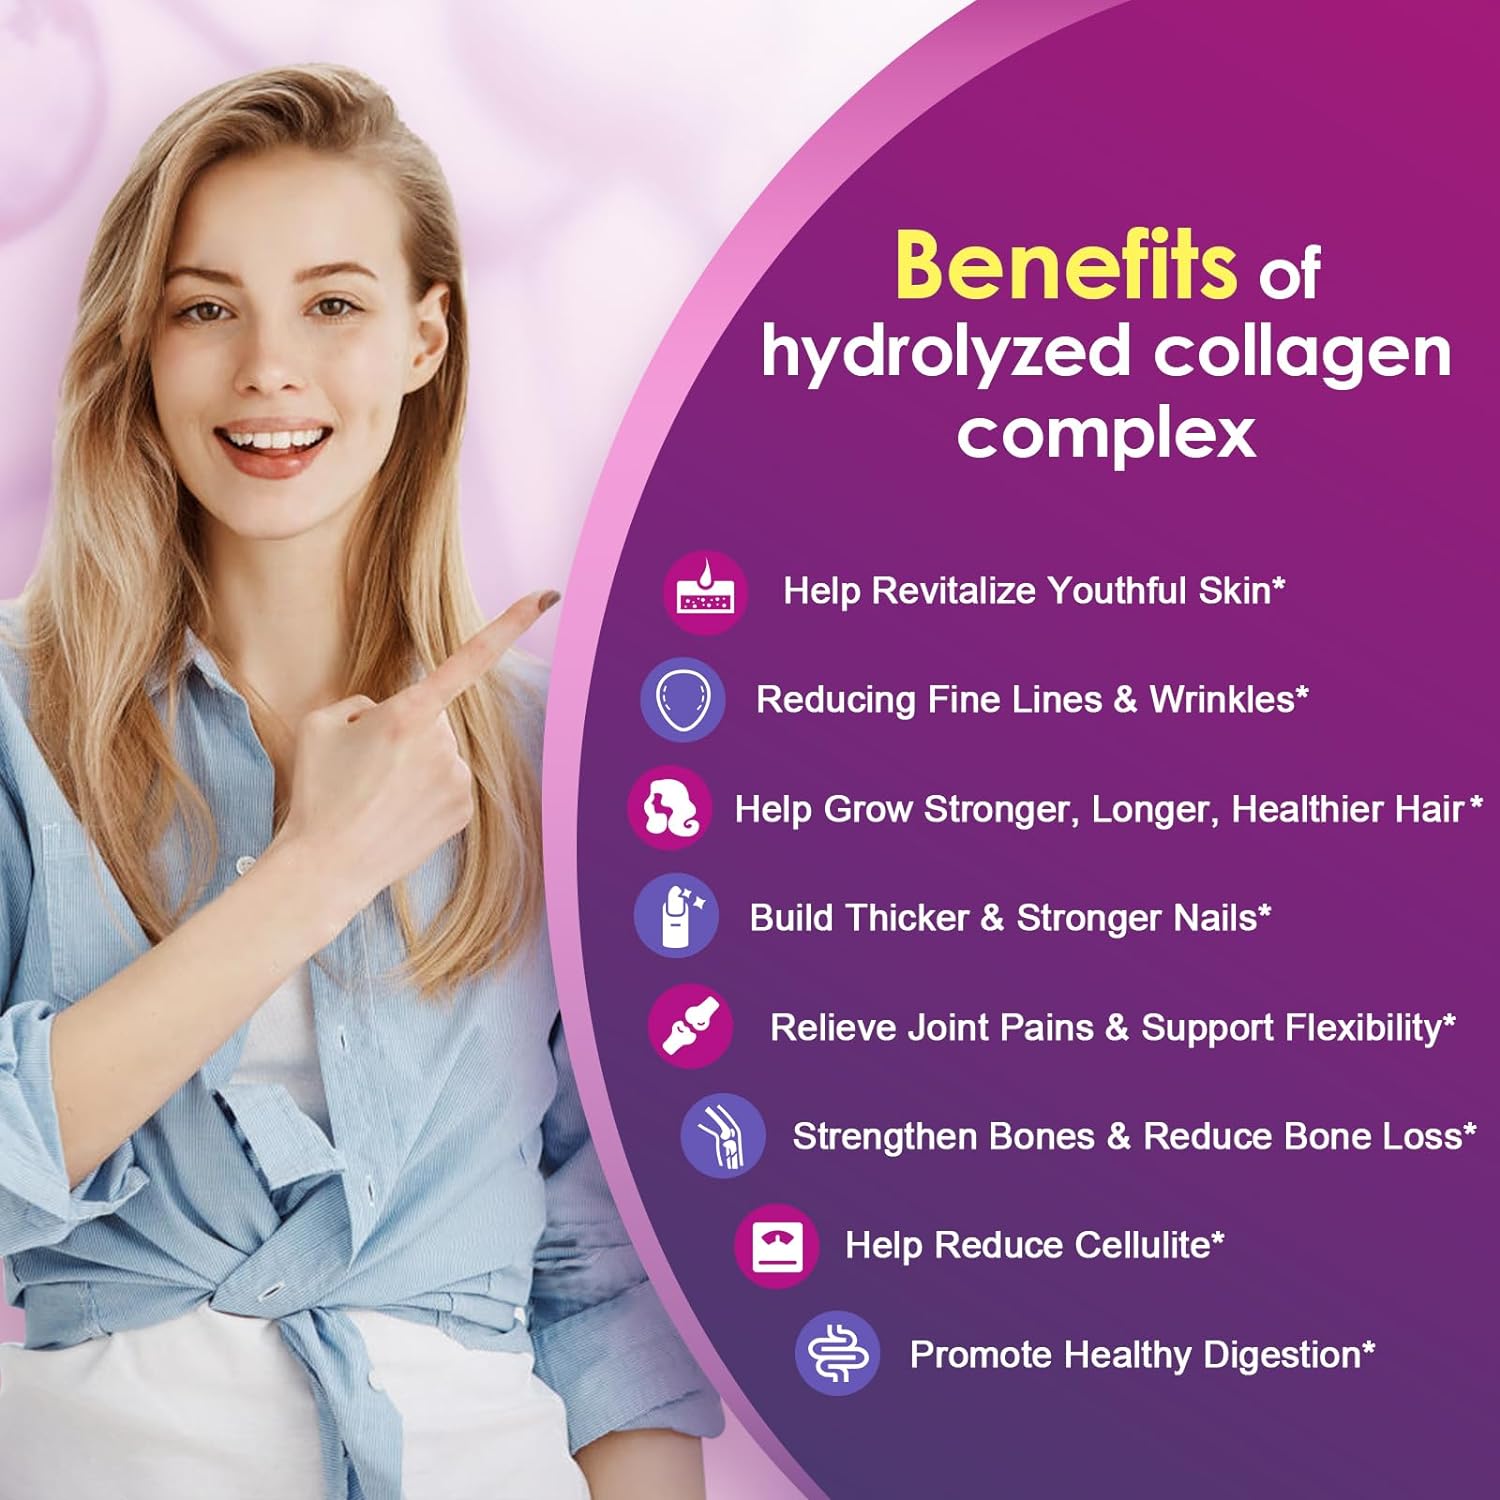 Benefits of hydrolyzed collagen complex